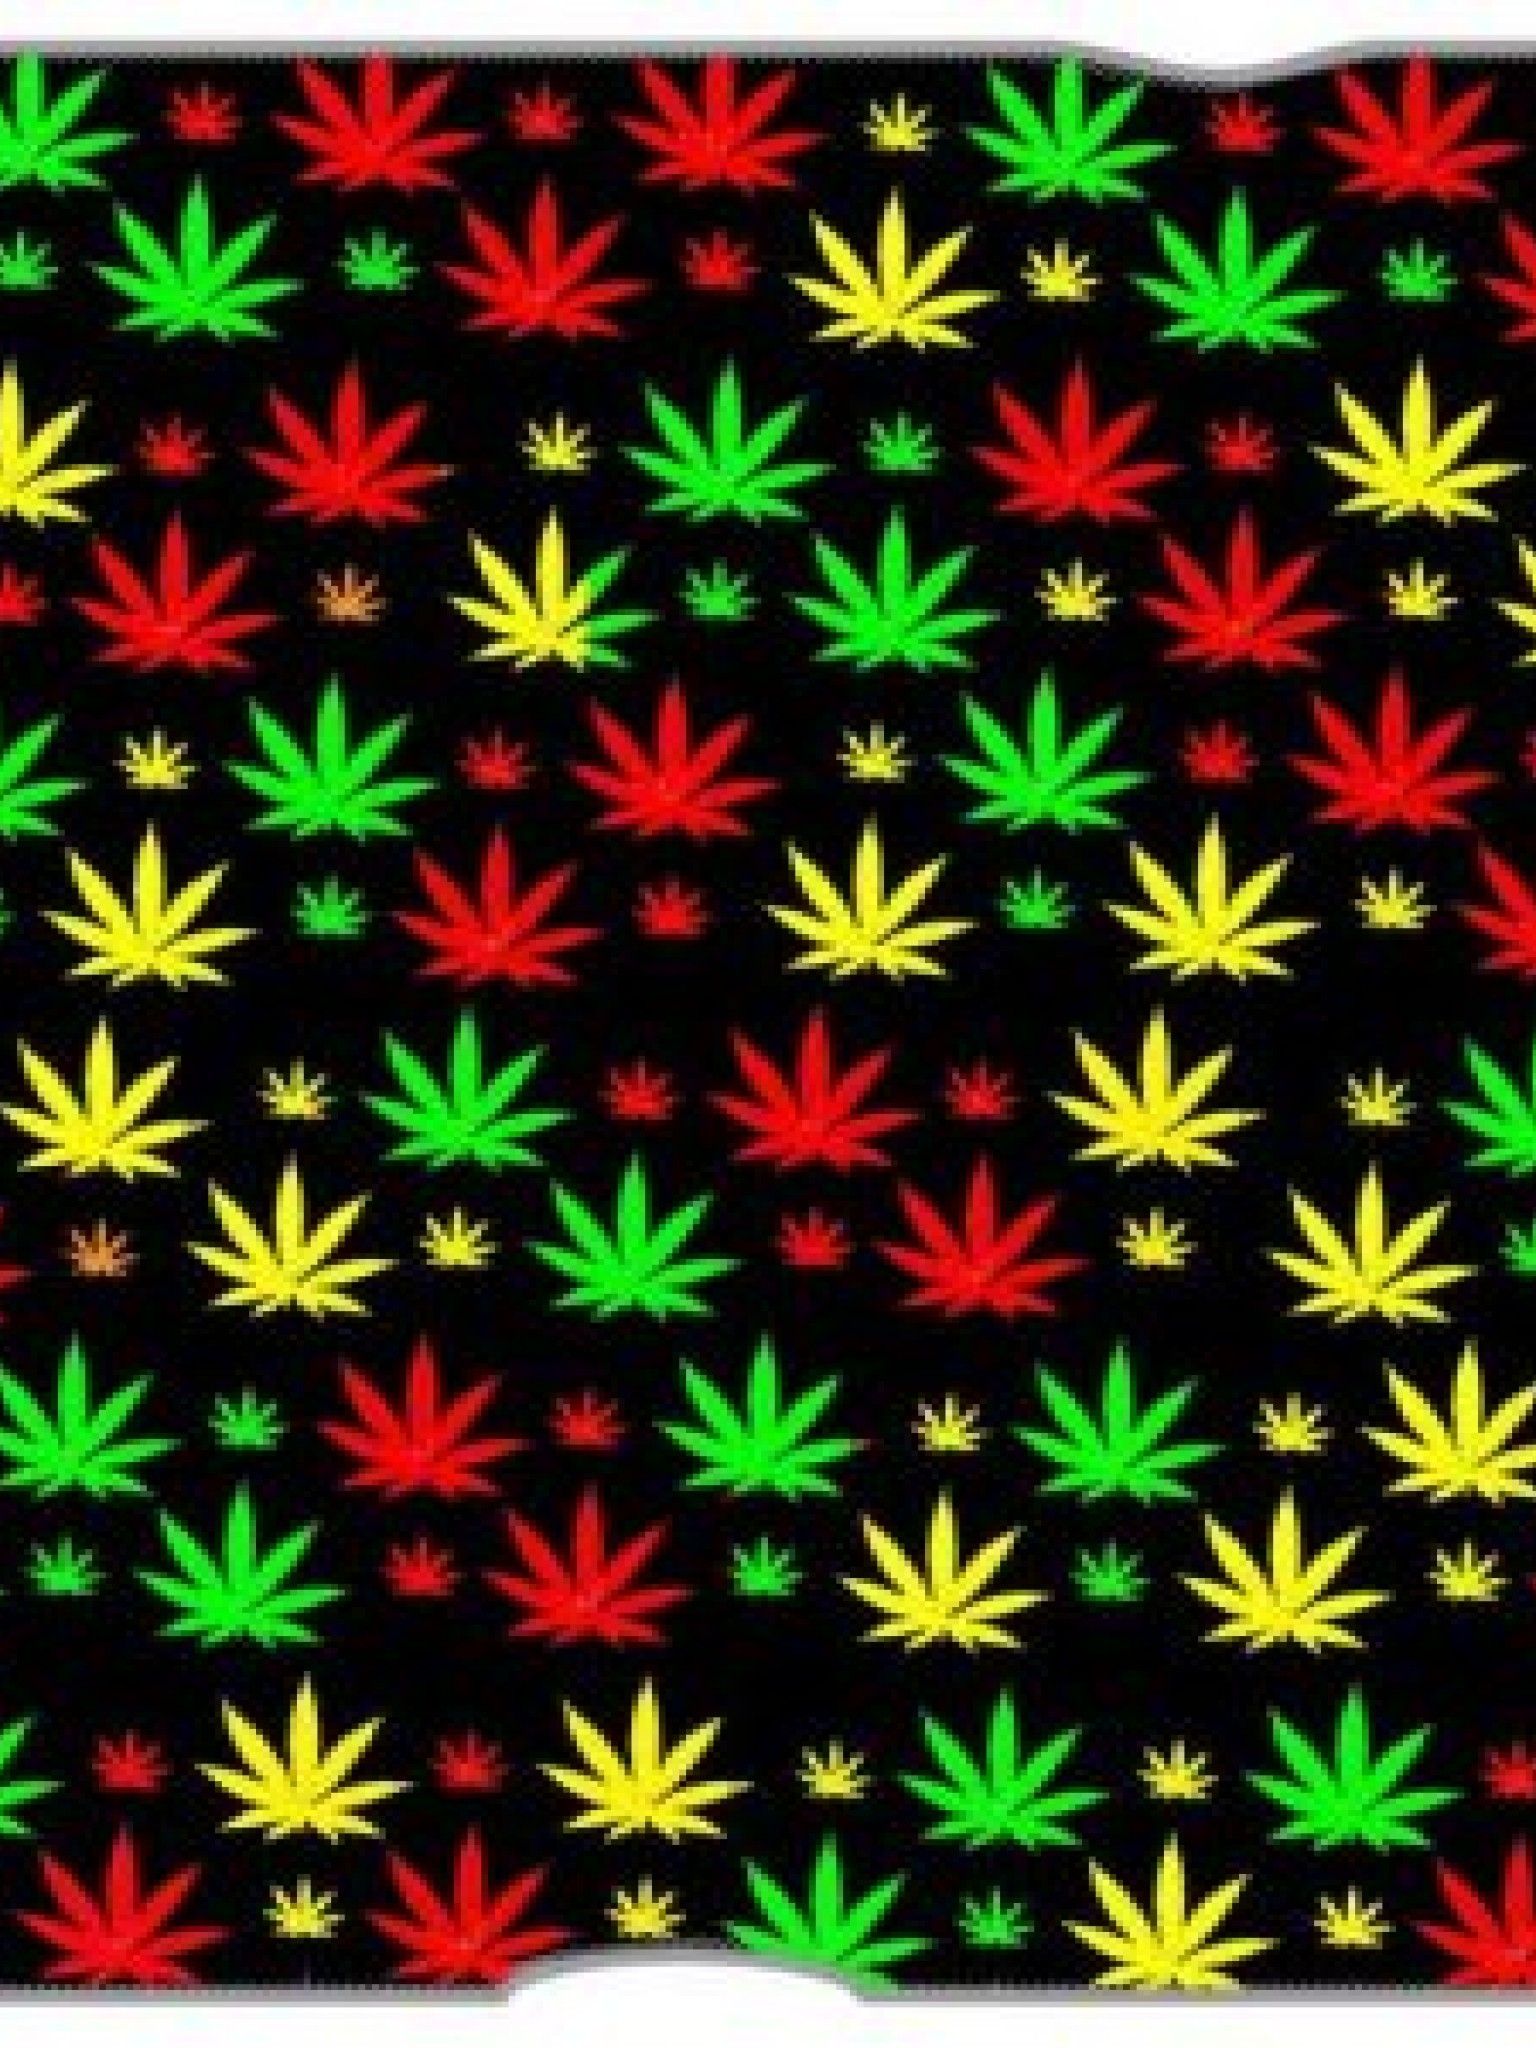 Free download Weed Iphone Wallpapers Tumblr Marijuana wallpapers hd